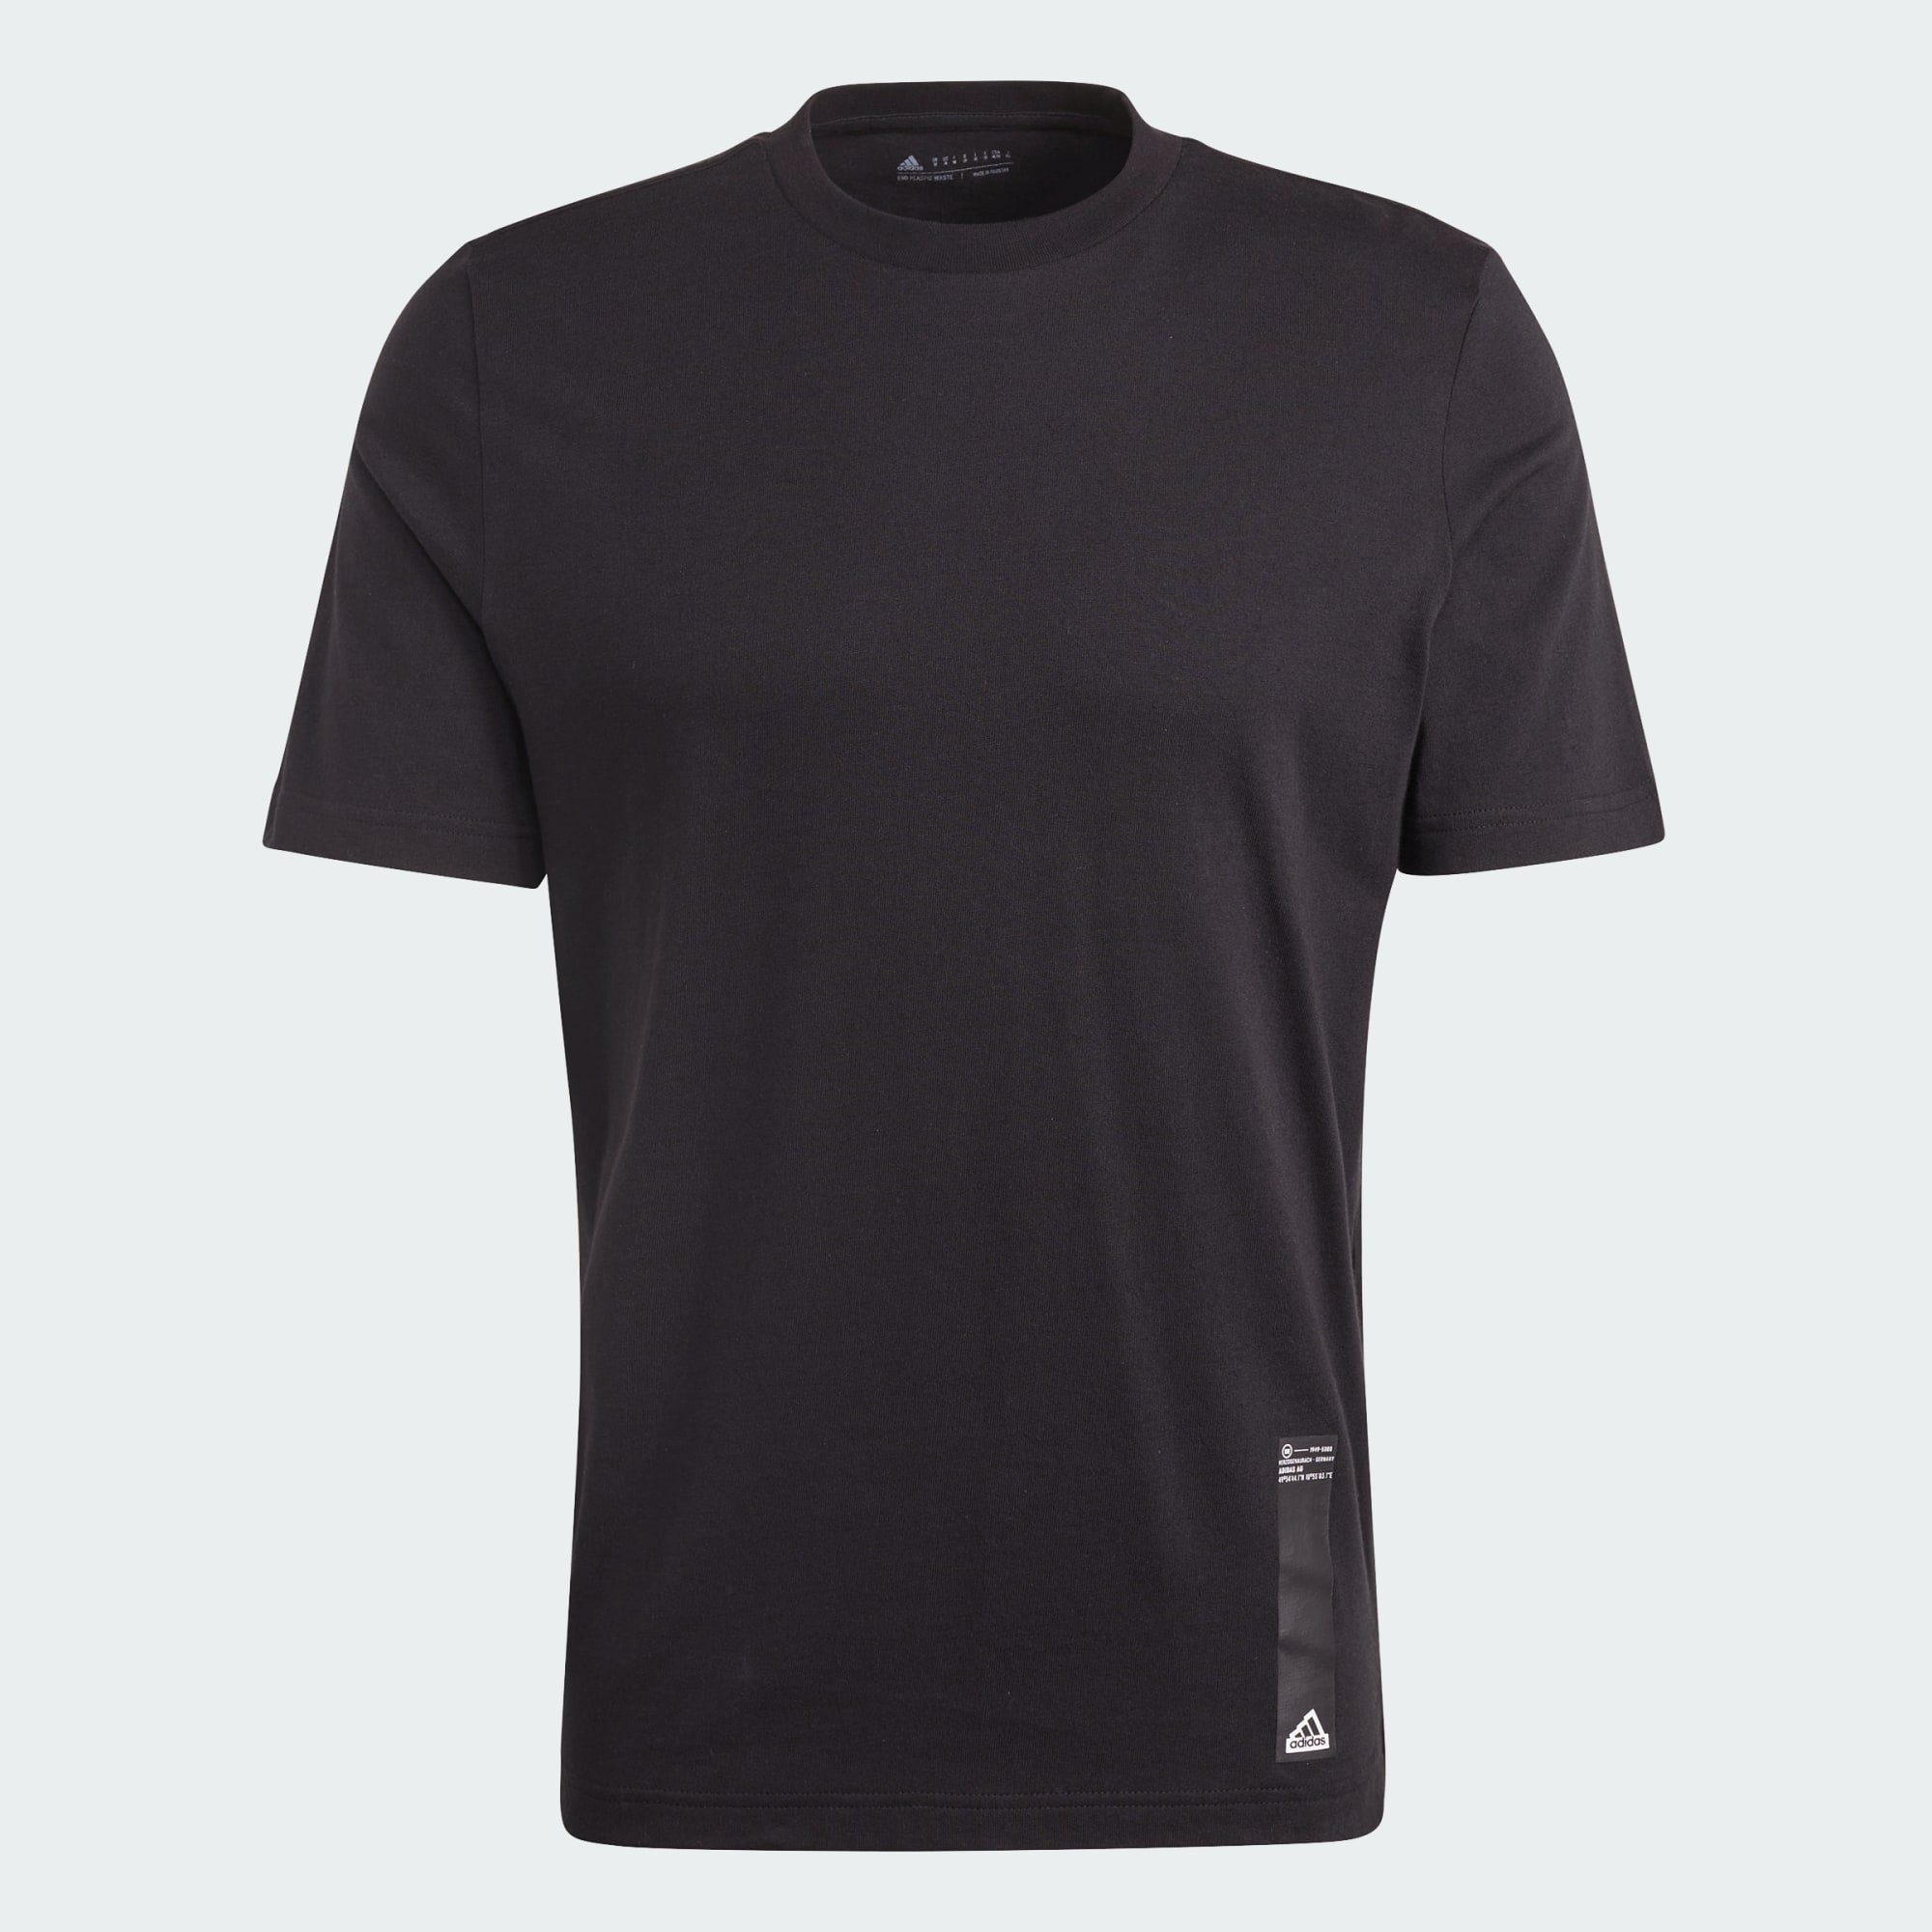 CITY adidas SPLIT-HEM Black T-SHIRT ESCAPE SPORTSWEAR Sportswear T-Shirt